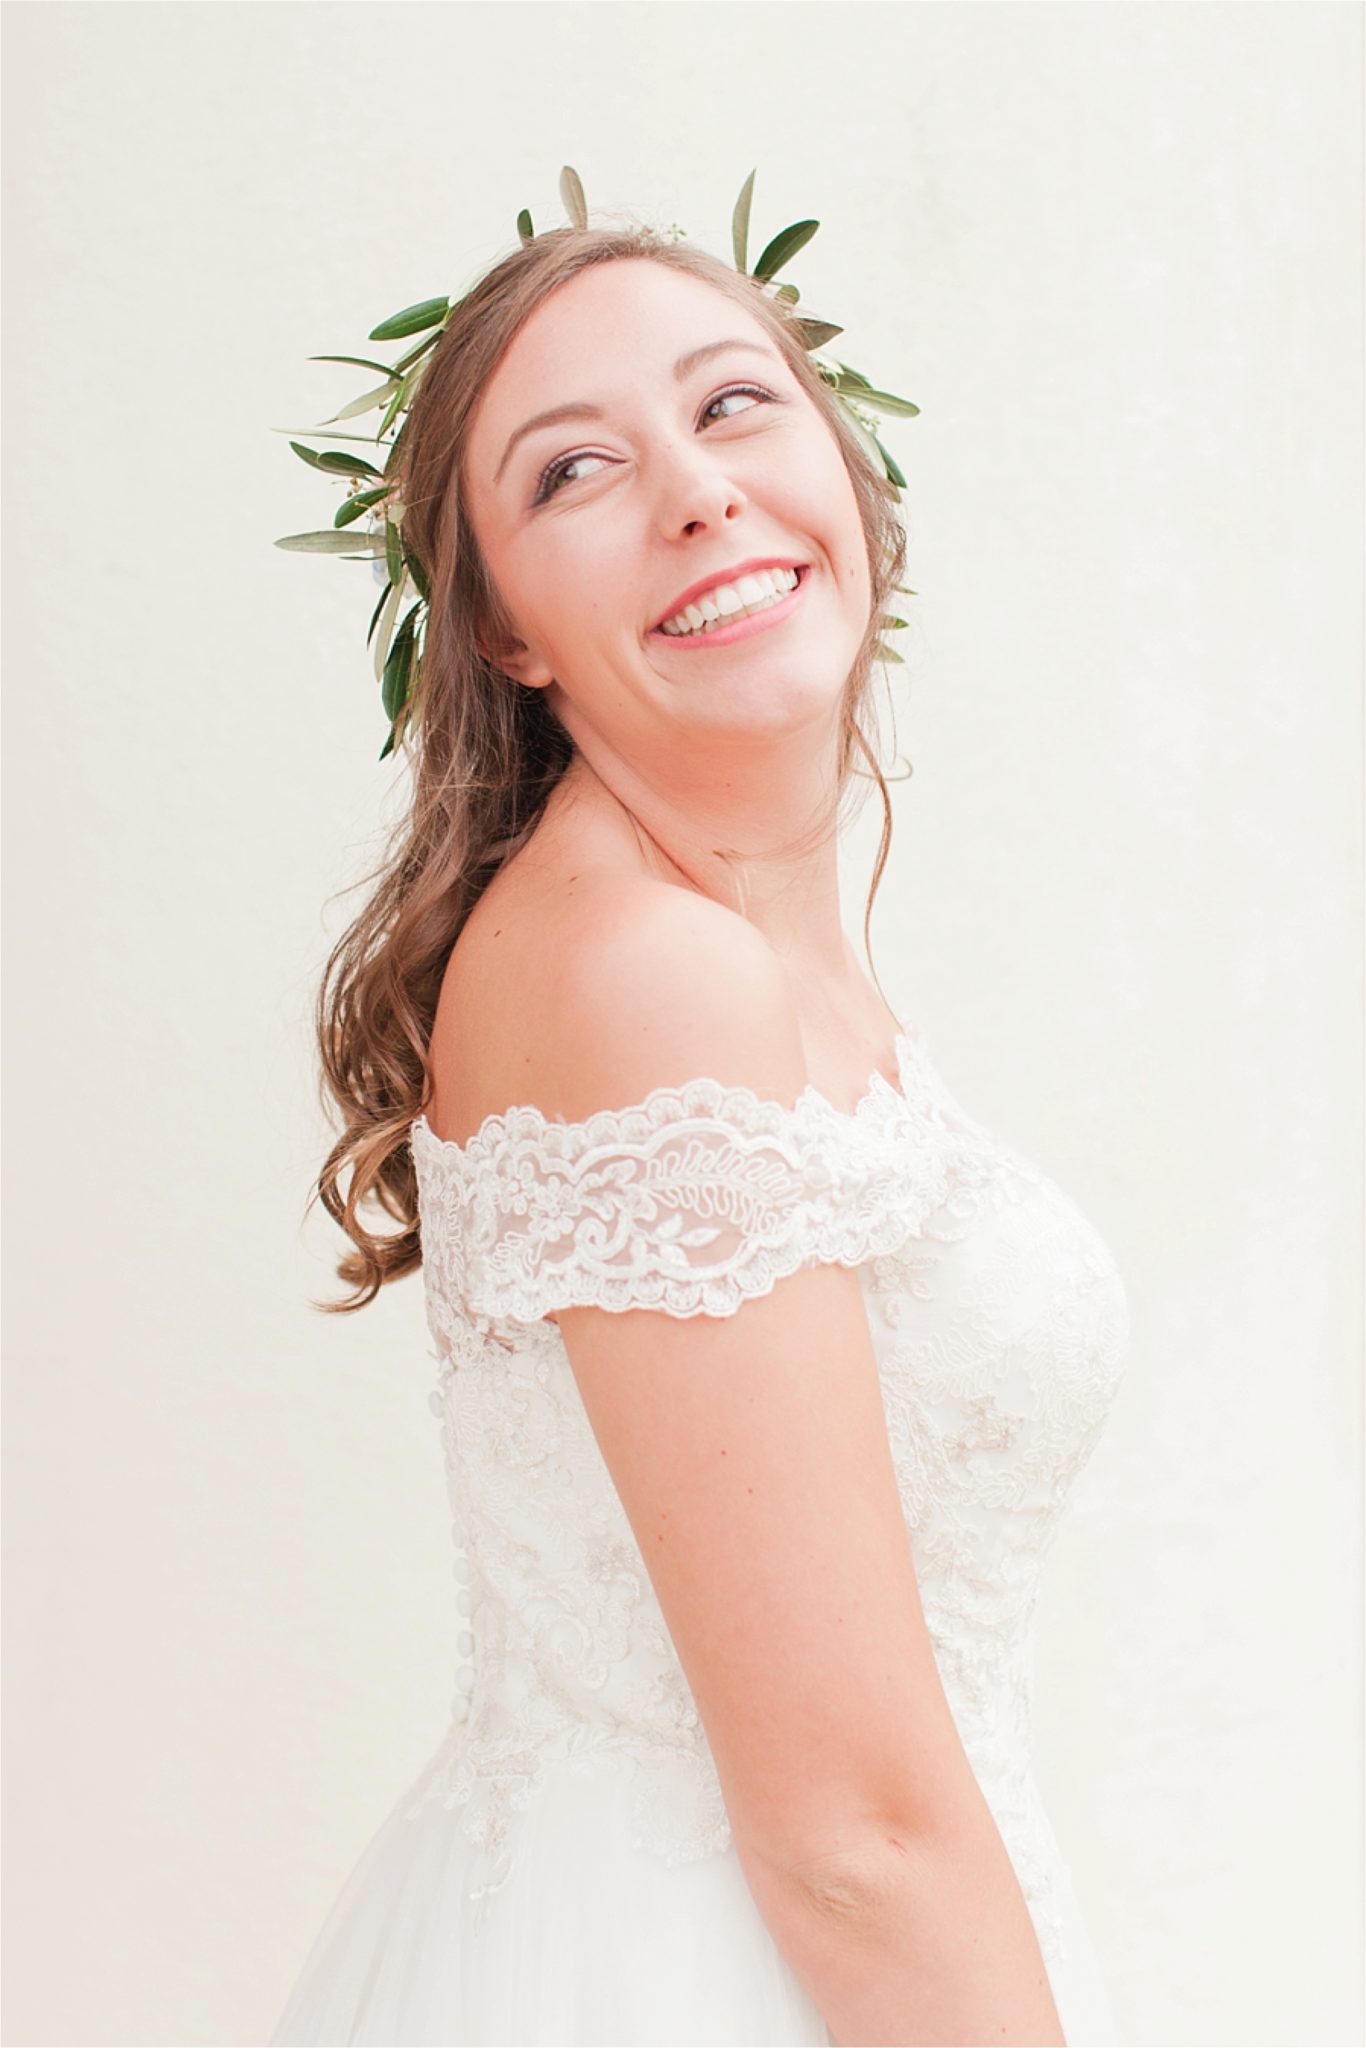 Bridal Portrait Session at Spring Hill College-Byrne Hall-Ginny-Alabama photographer-Wedding bouquet-Bride-Lace wedding dress-Bridal shoot inspiration